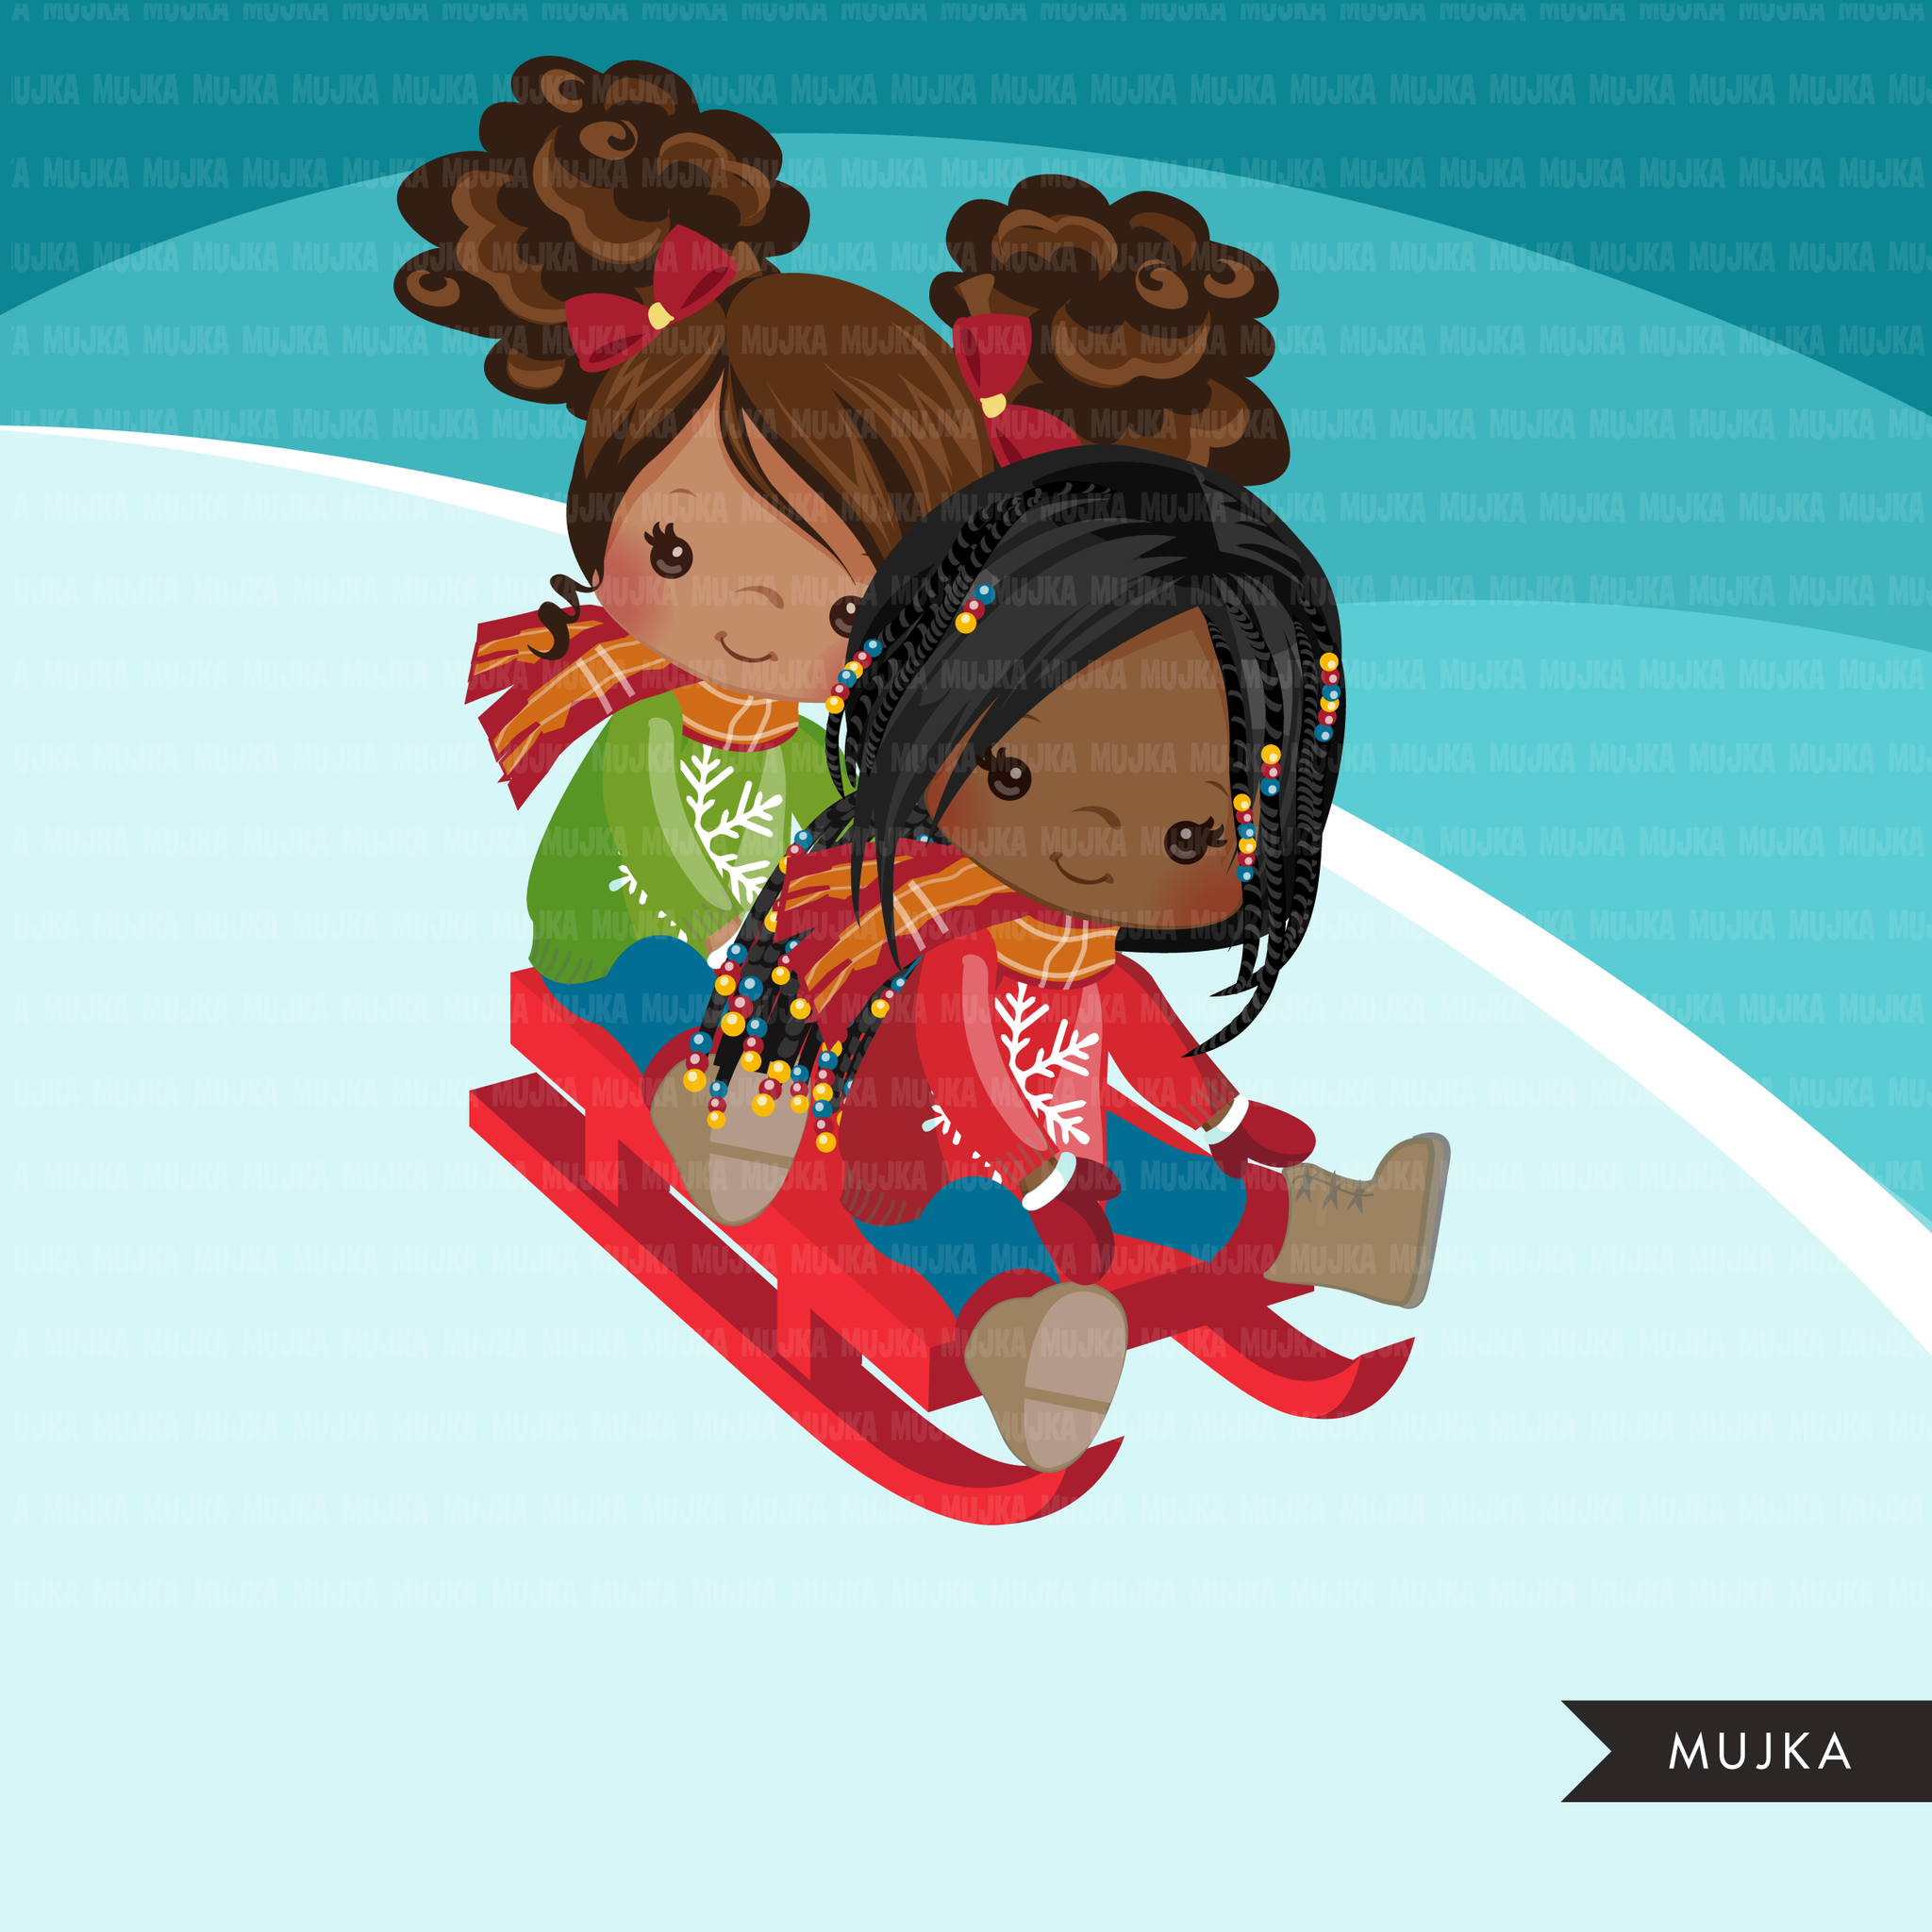 Winter sledding Kids Clipart Bundle, cute outdoors graphics tobogganing boy and girl, children snow day bundle